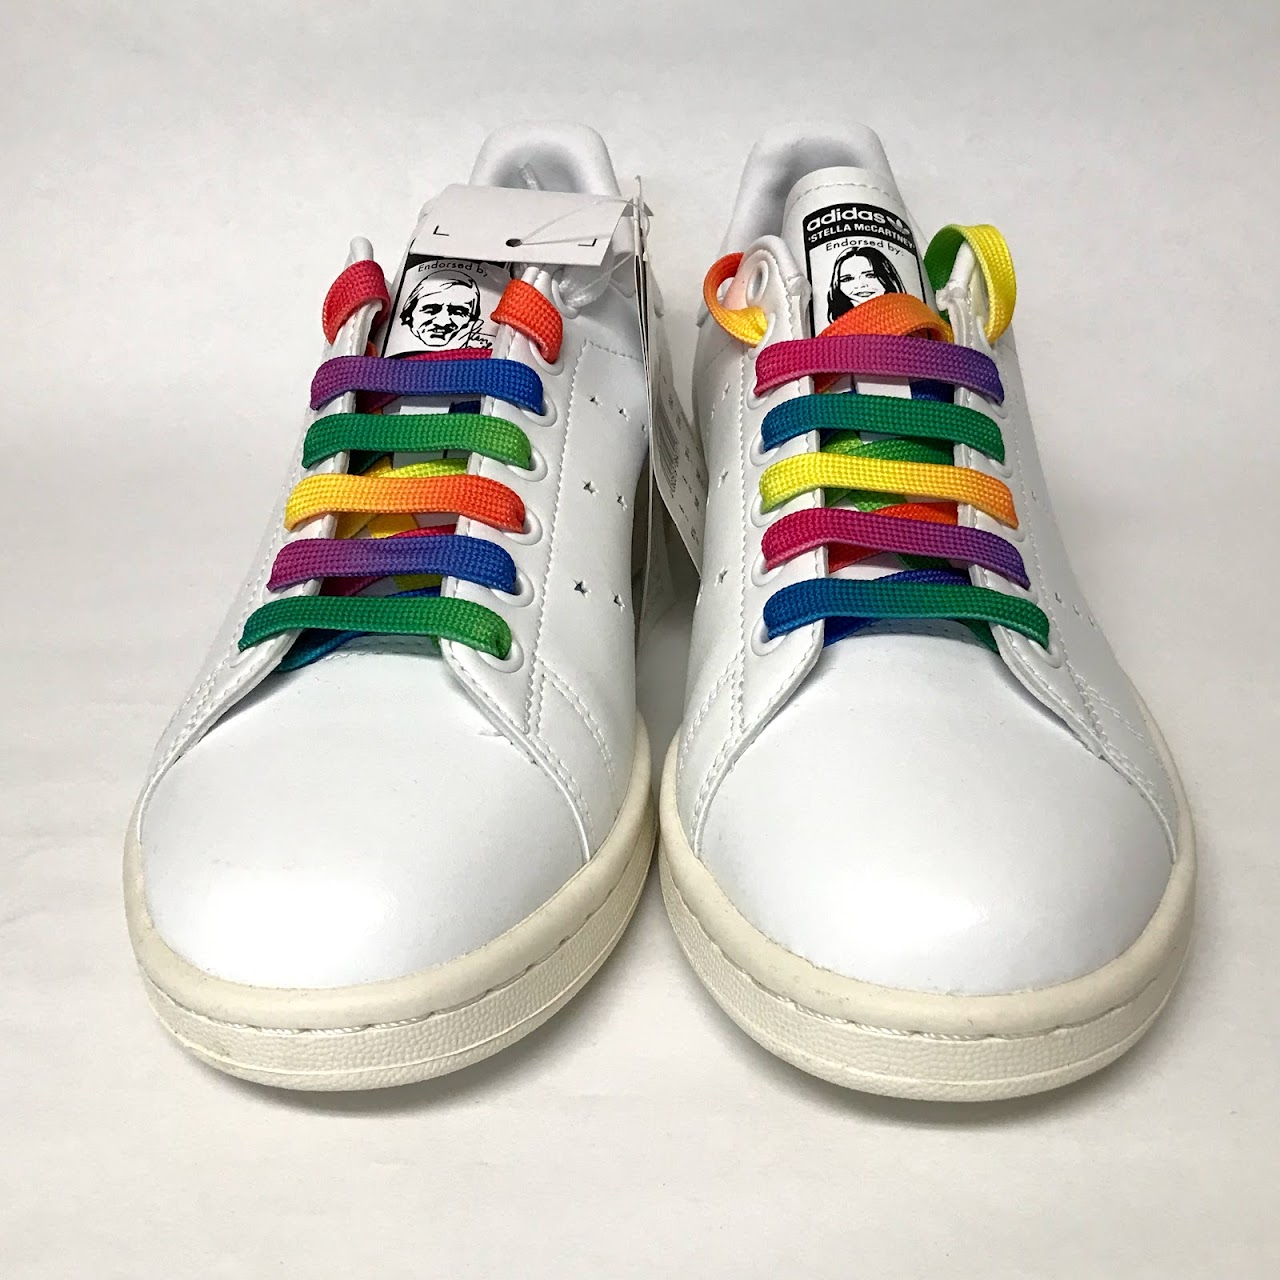 Stella McCartney x Adidas NEW Stan Smith Rainbow Vegan Sneakers